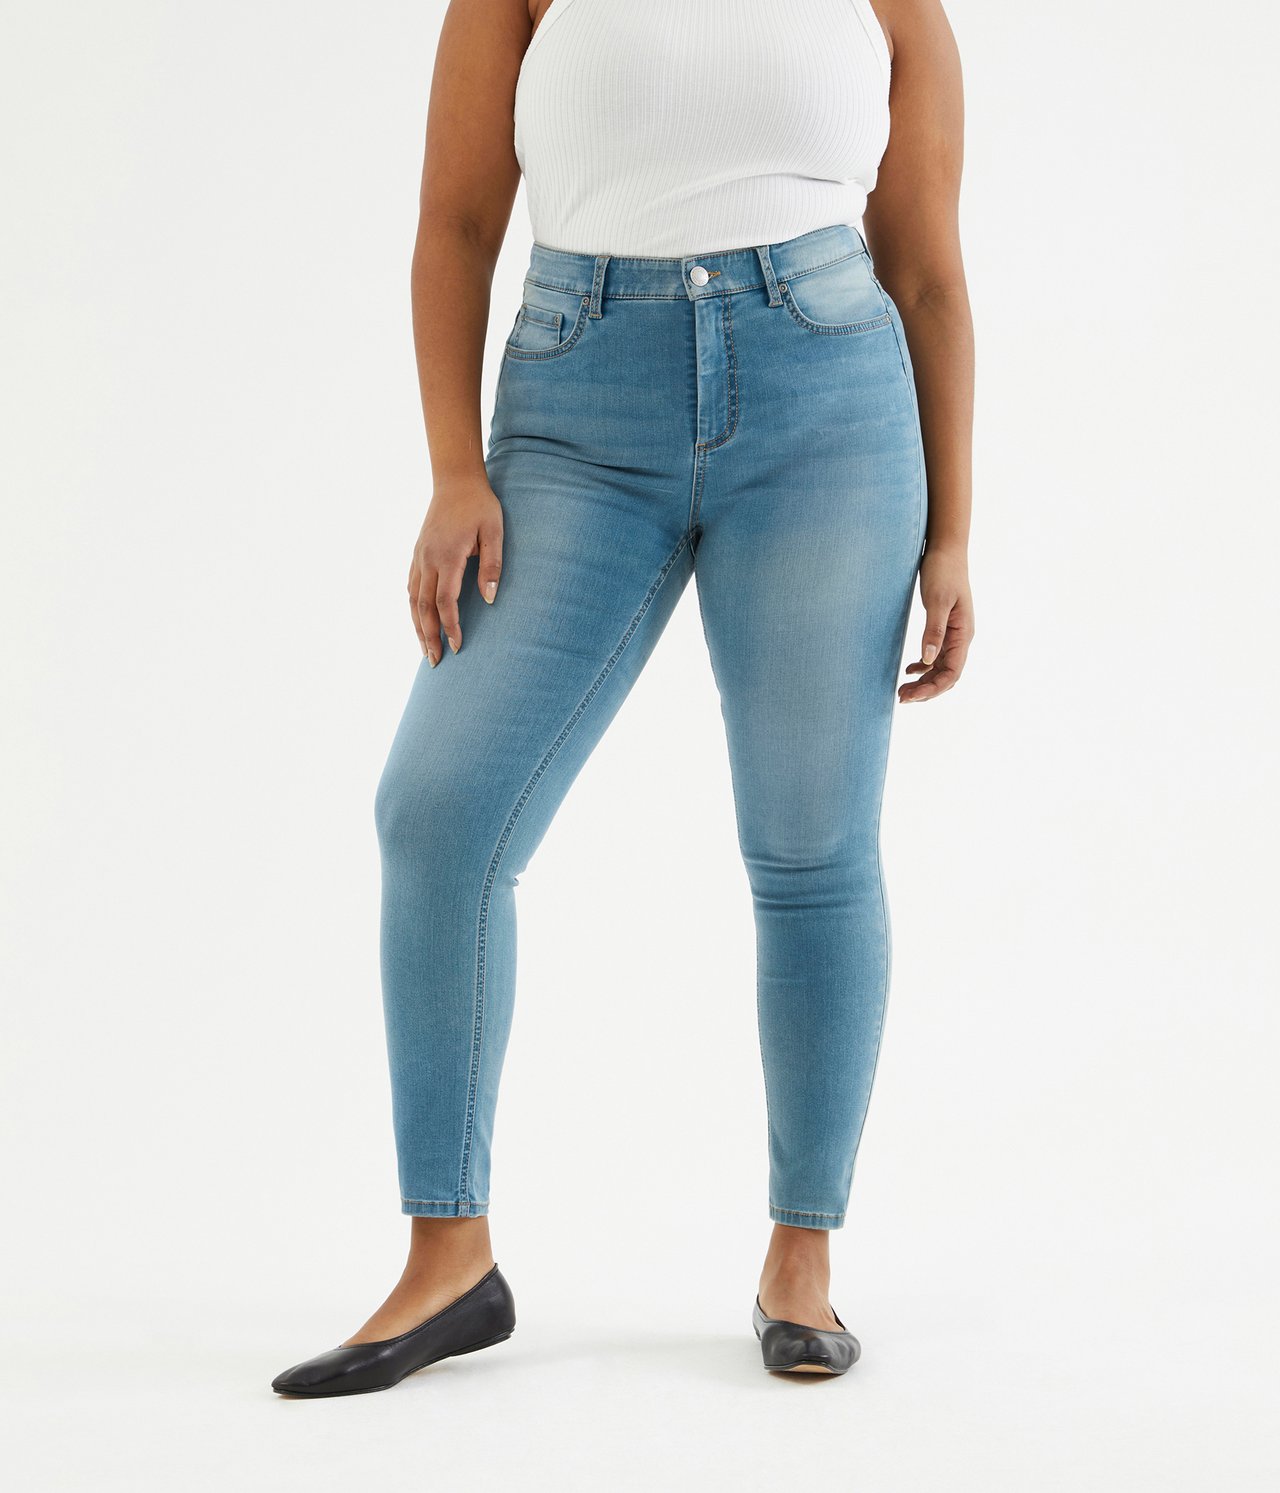 Super slim jeans short leg - Denimi - 7